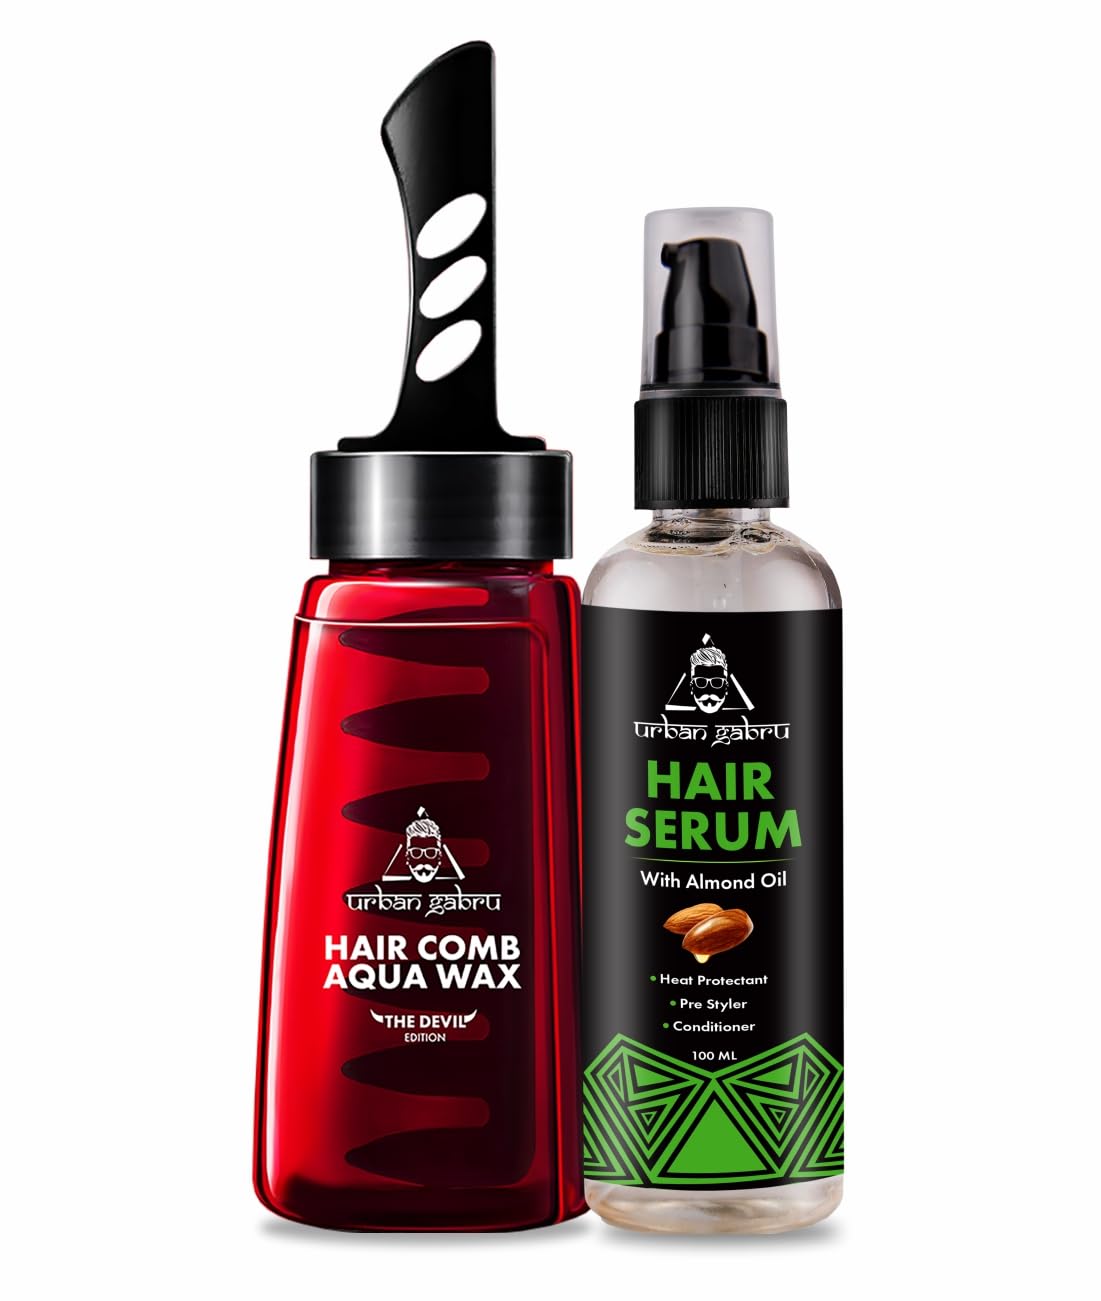 Urbangabru Hair Comb Aqua Wax (260 ML) & Pre- Styler Hair Serum for Men (100 ML) - Mens Grooming Combo Kit